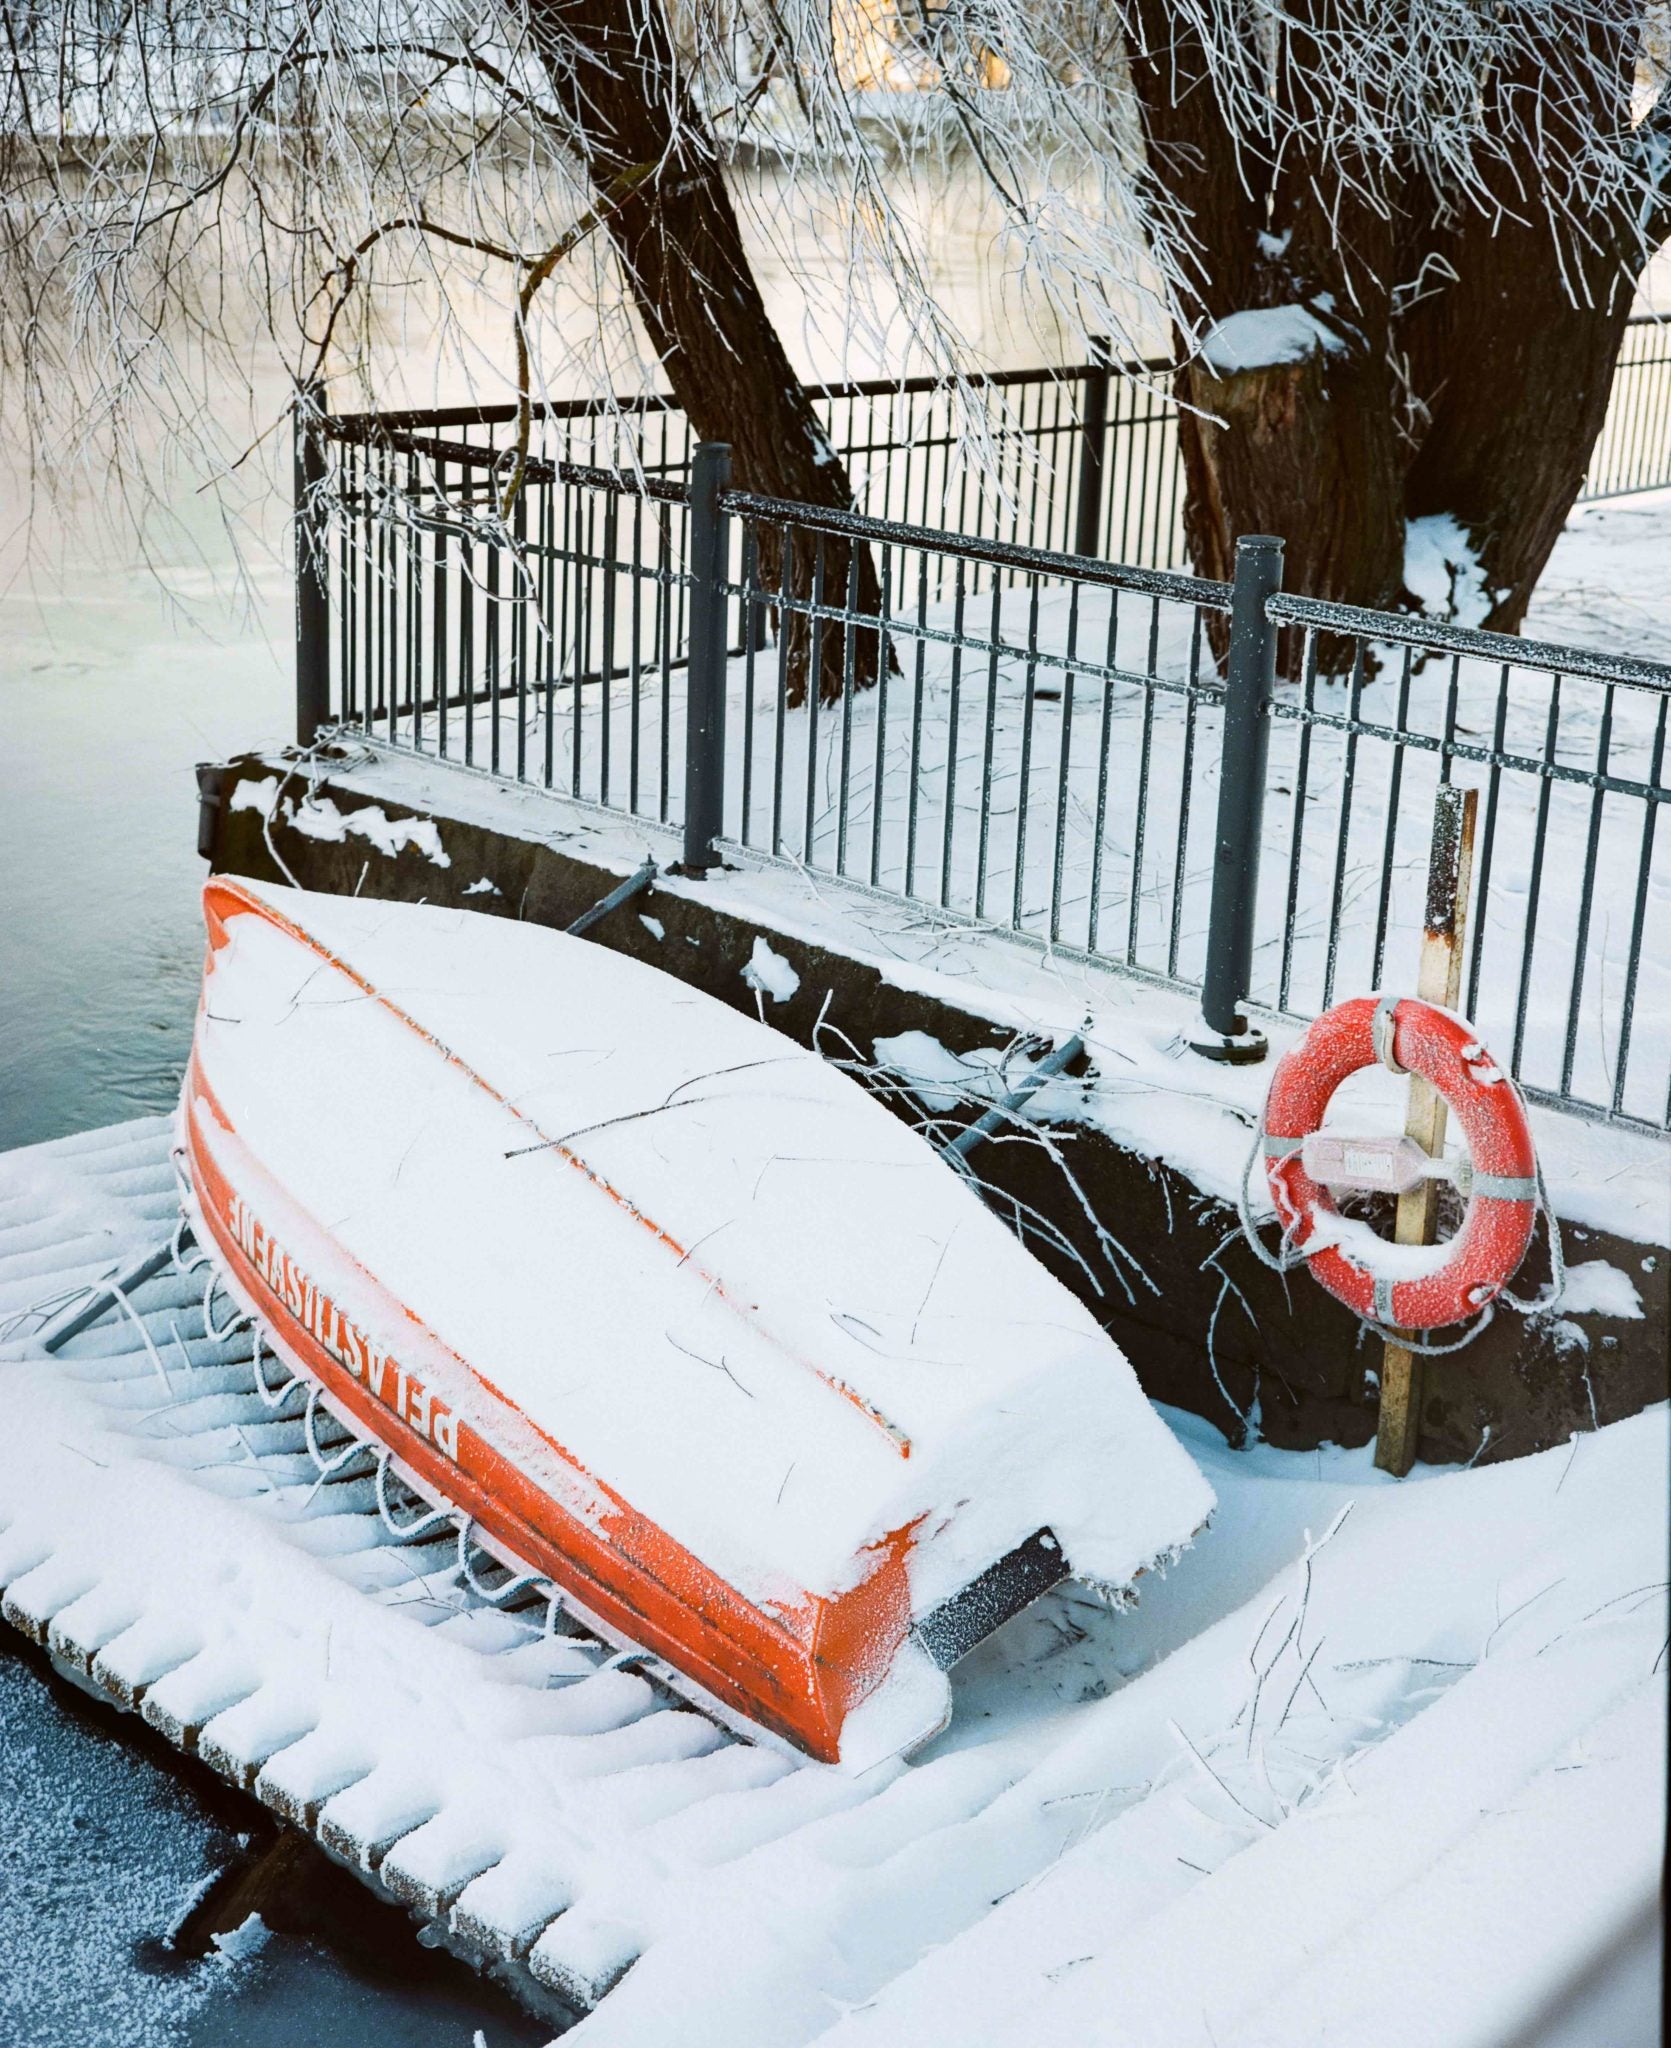 Lifesaving boat upside down on a winter riverside